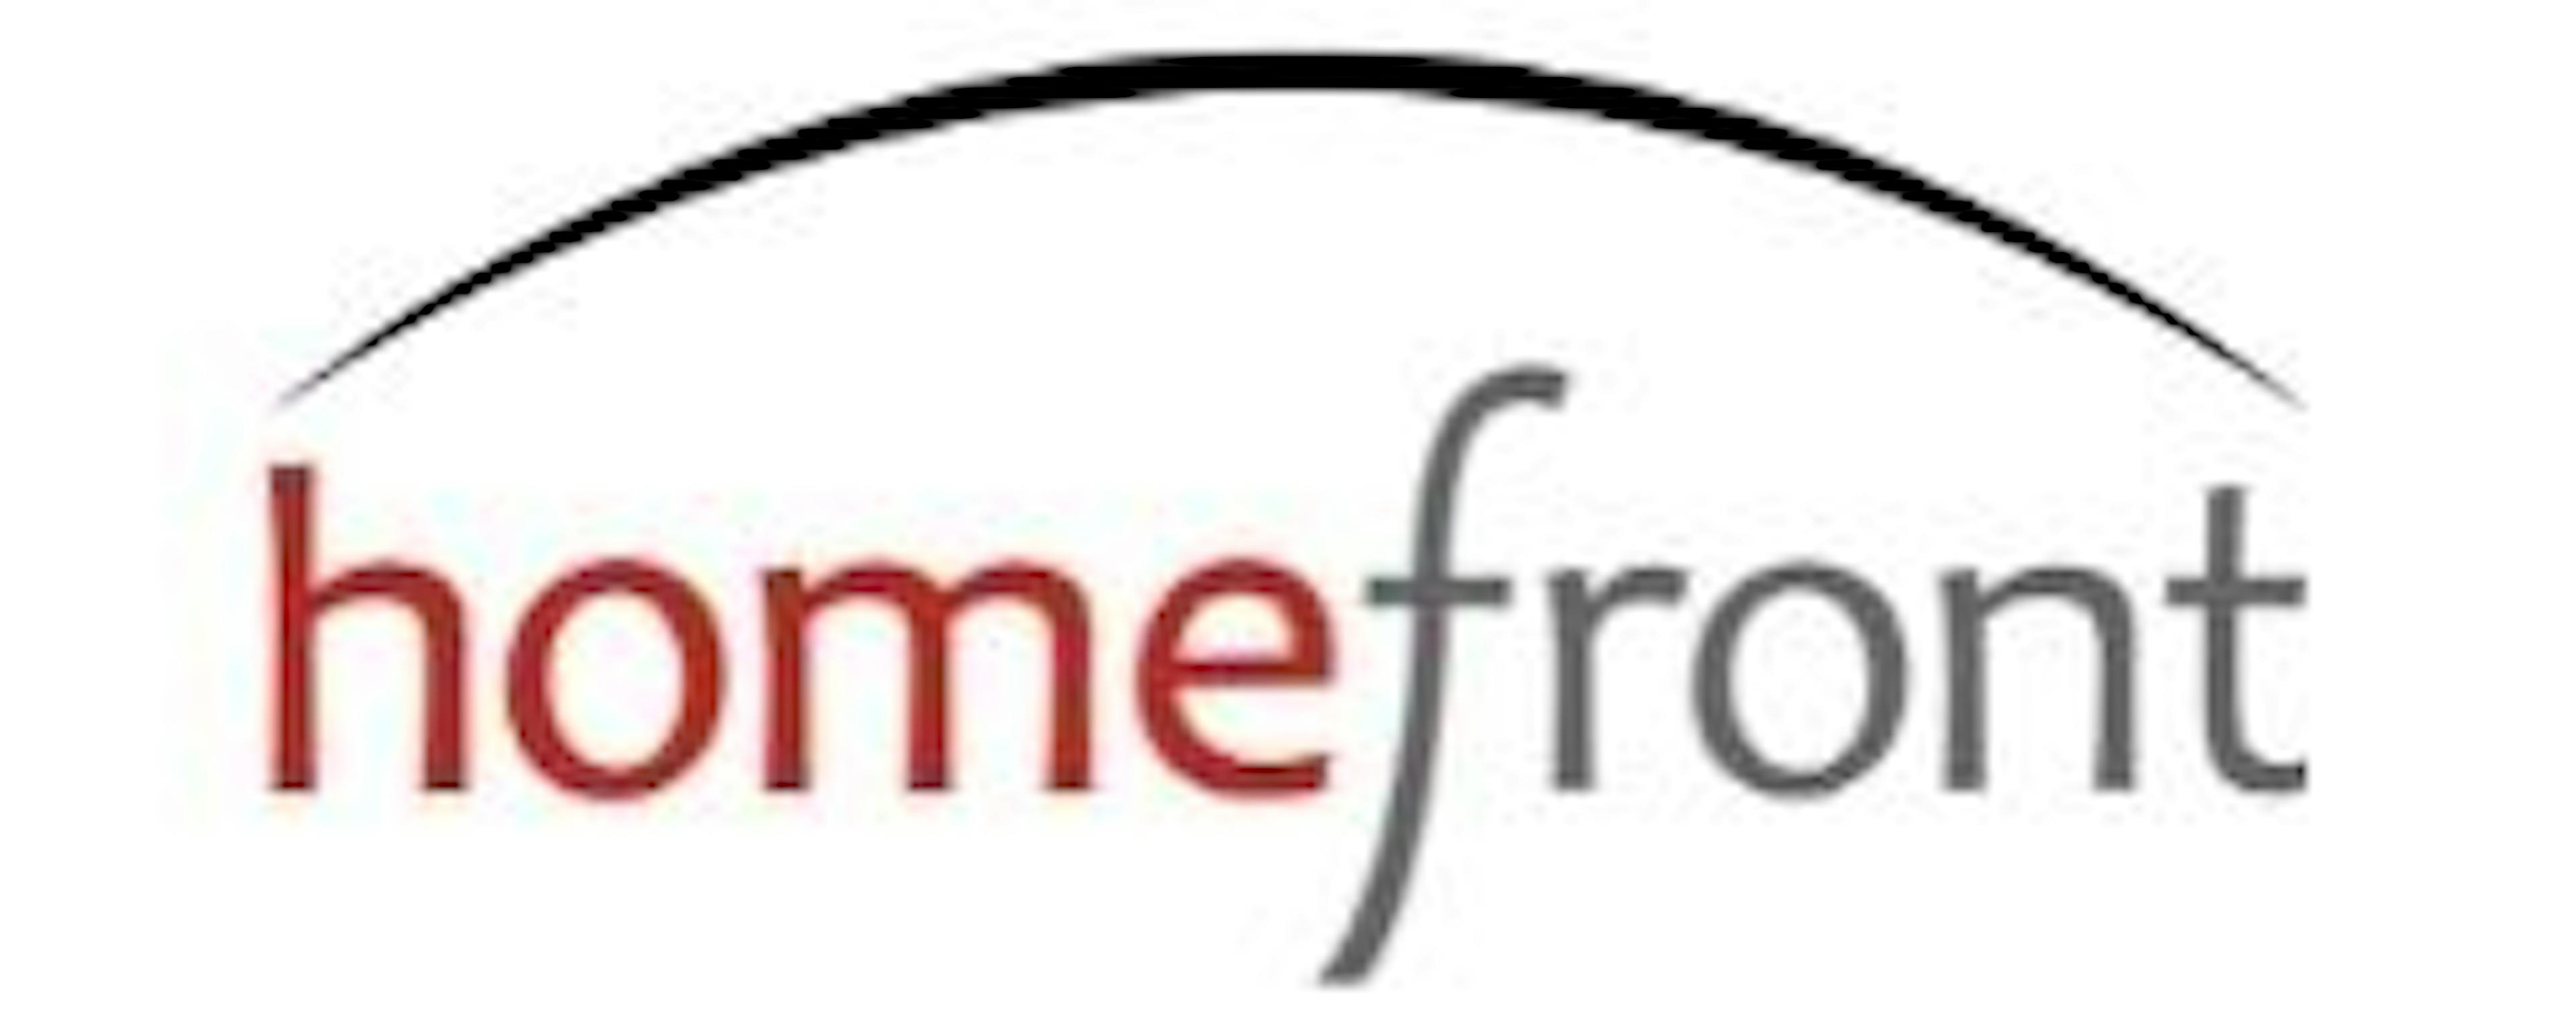 Homefront logo